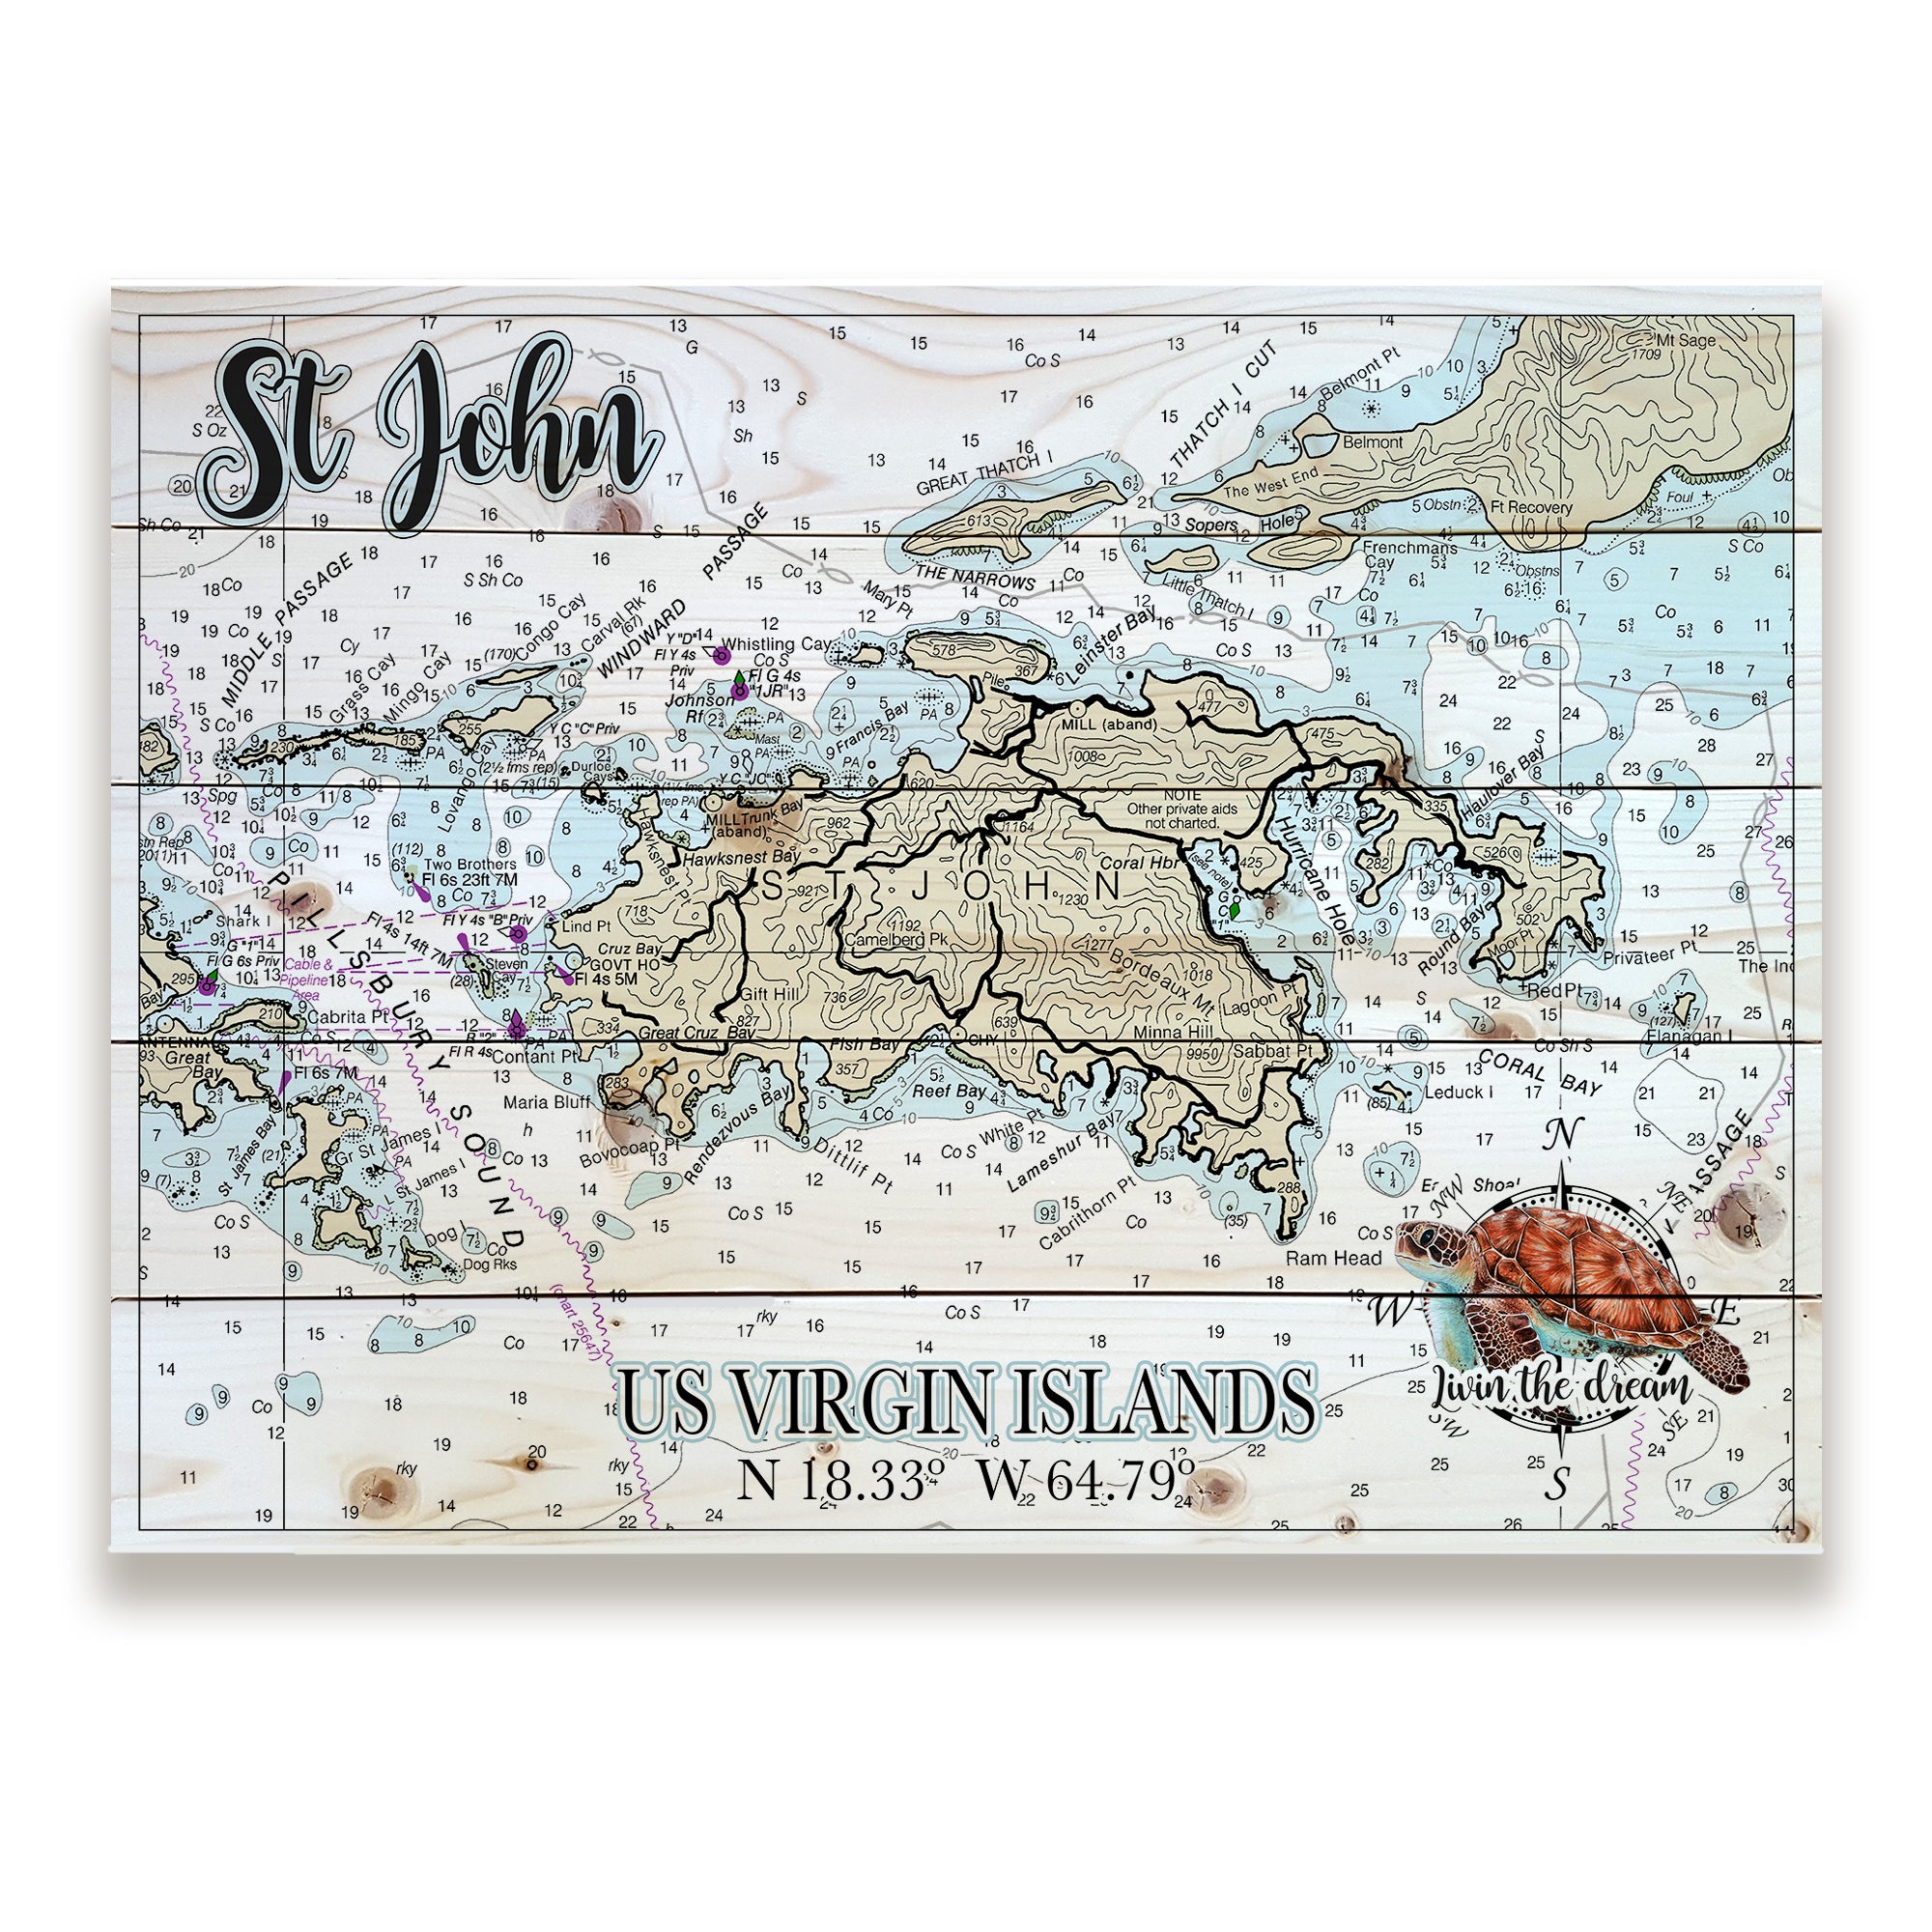 St. John - US Virgin Islands Pallet Map